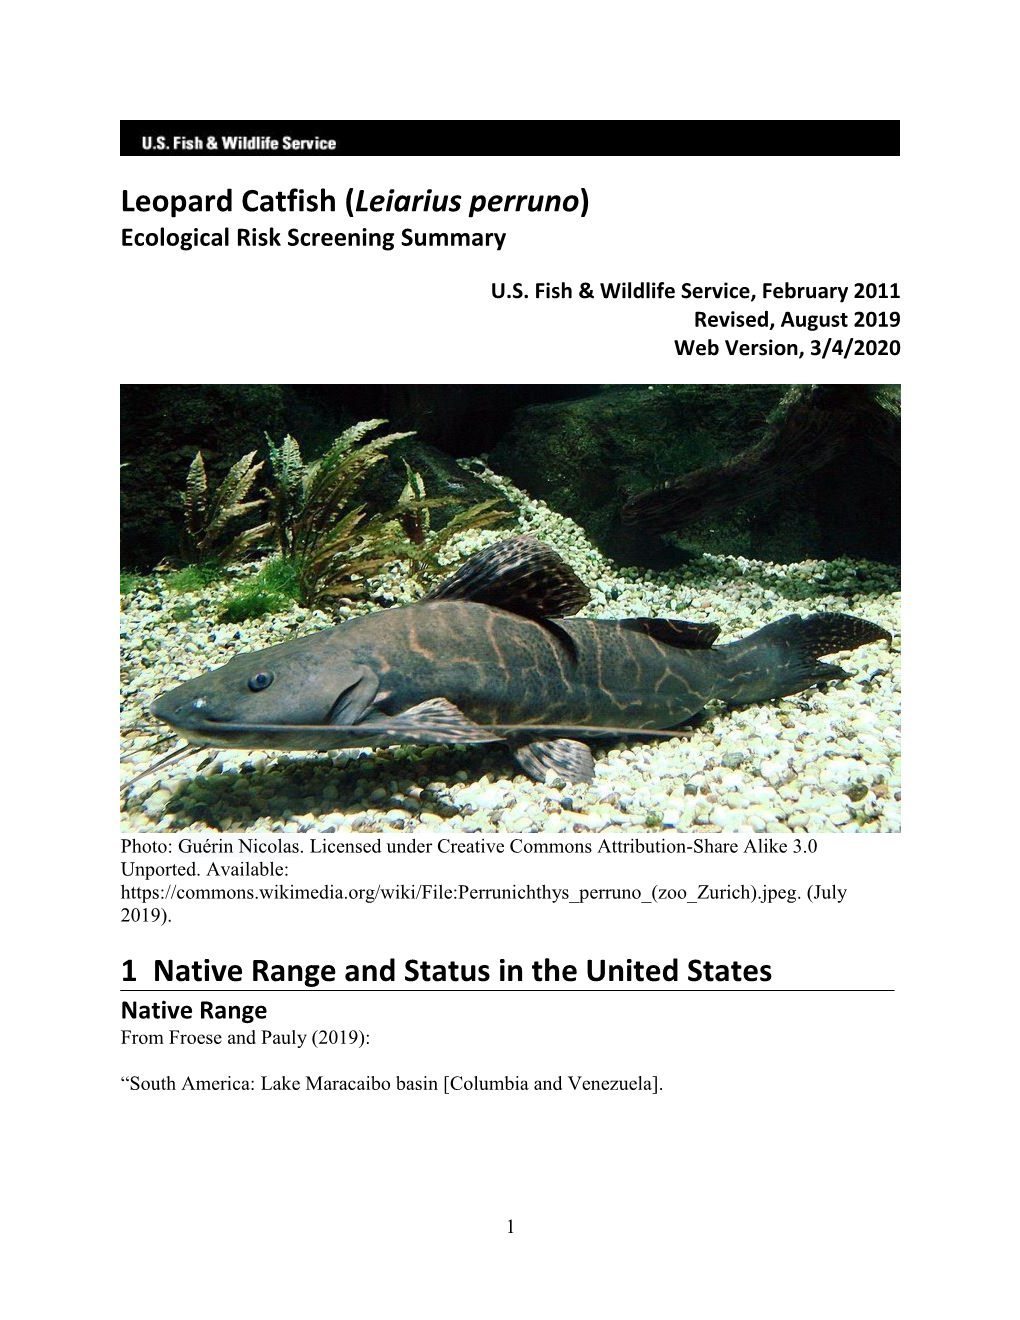 Leopard Catfish (Leiarius Perruno) Ecological Risk Screening Summary